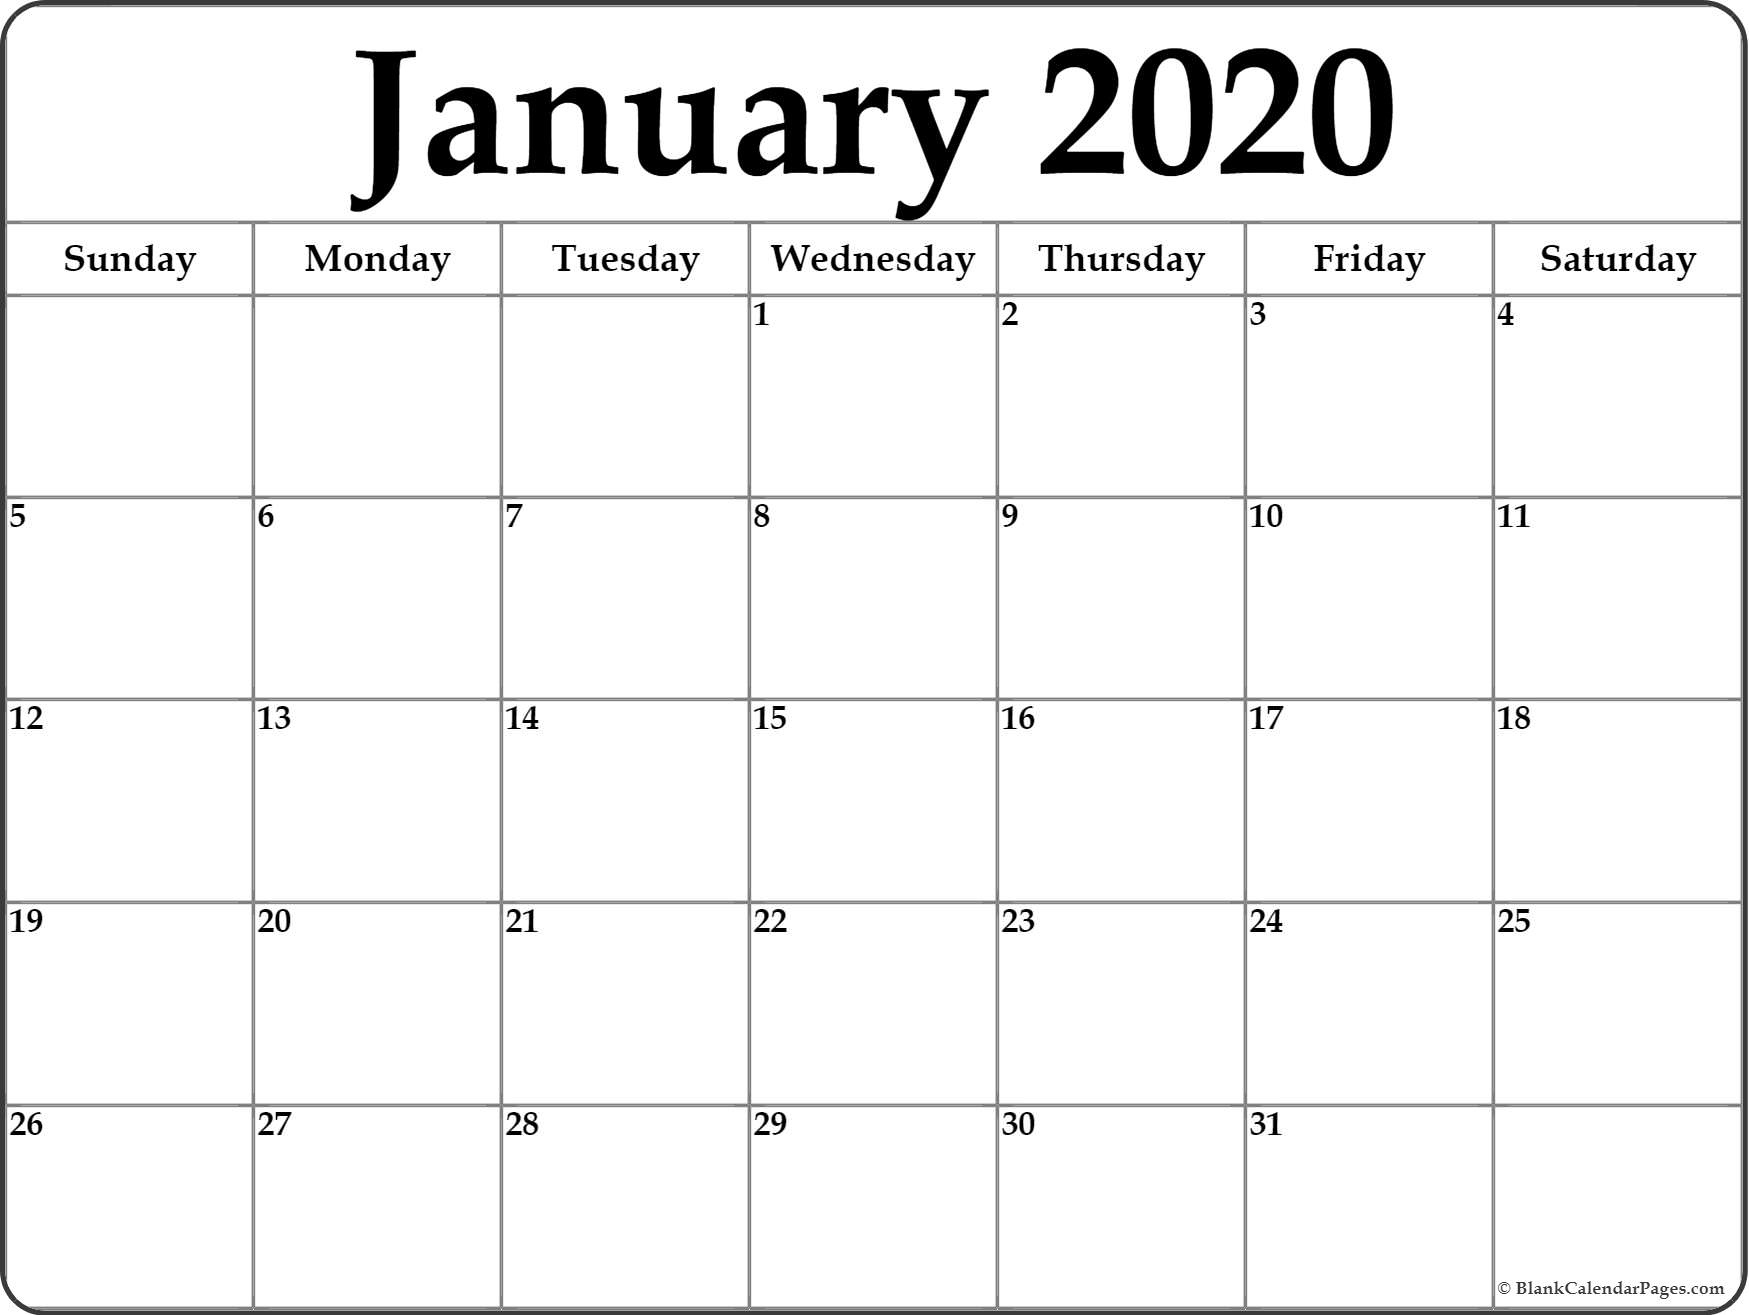 January 2020 Calendar | Free Printable Monthly Calendars pertaining to 2020 Imom Calendar Printable